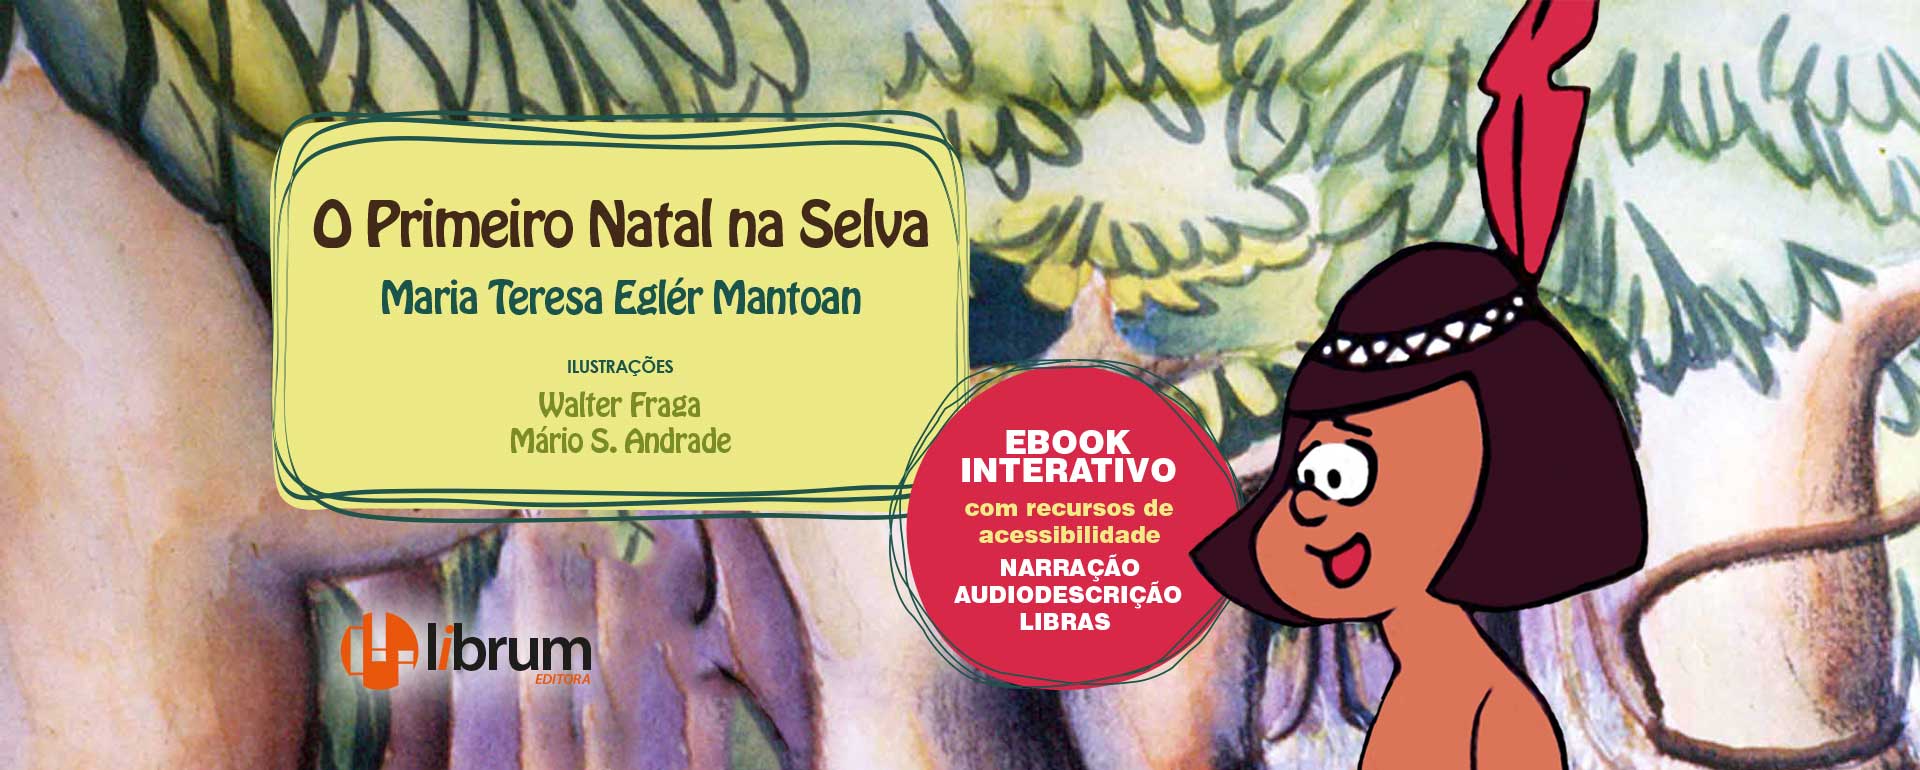 O Primeiro Natal na Selva - Maria Teresa Eglér Mantoan - Librum Editora -  DOWNLOAD GRATUITO